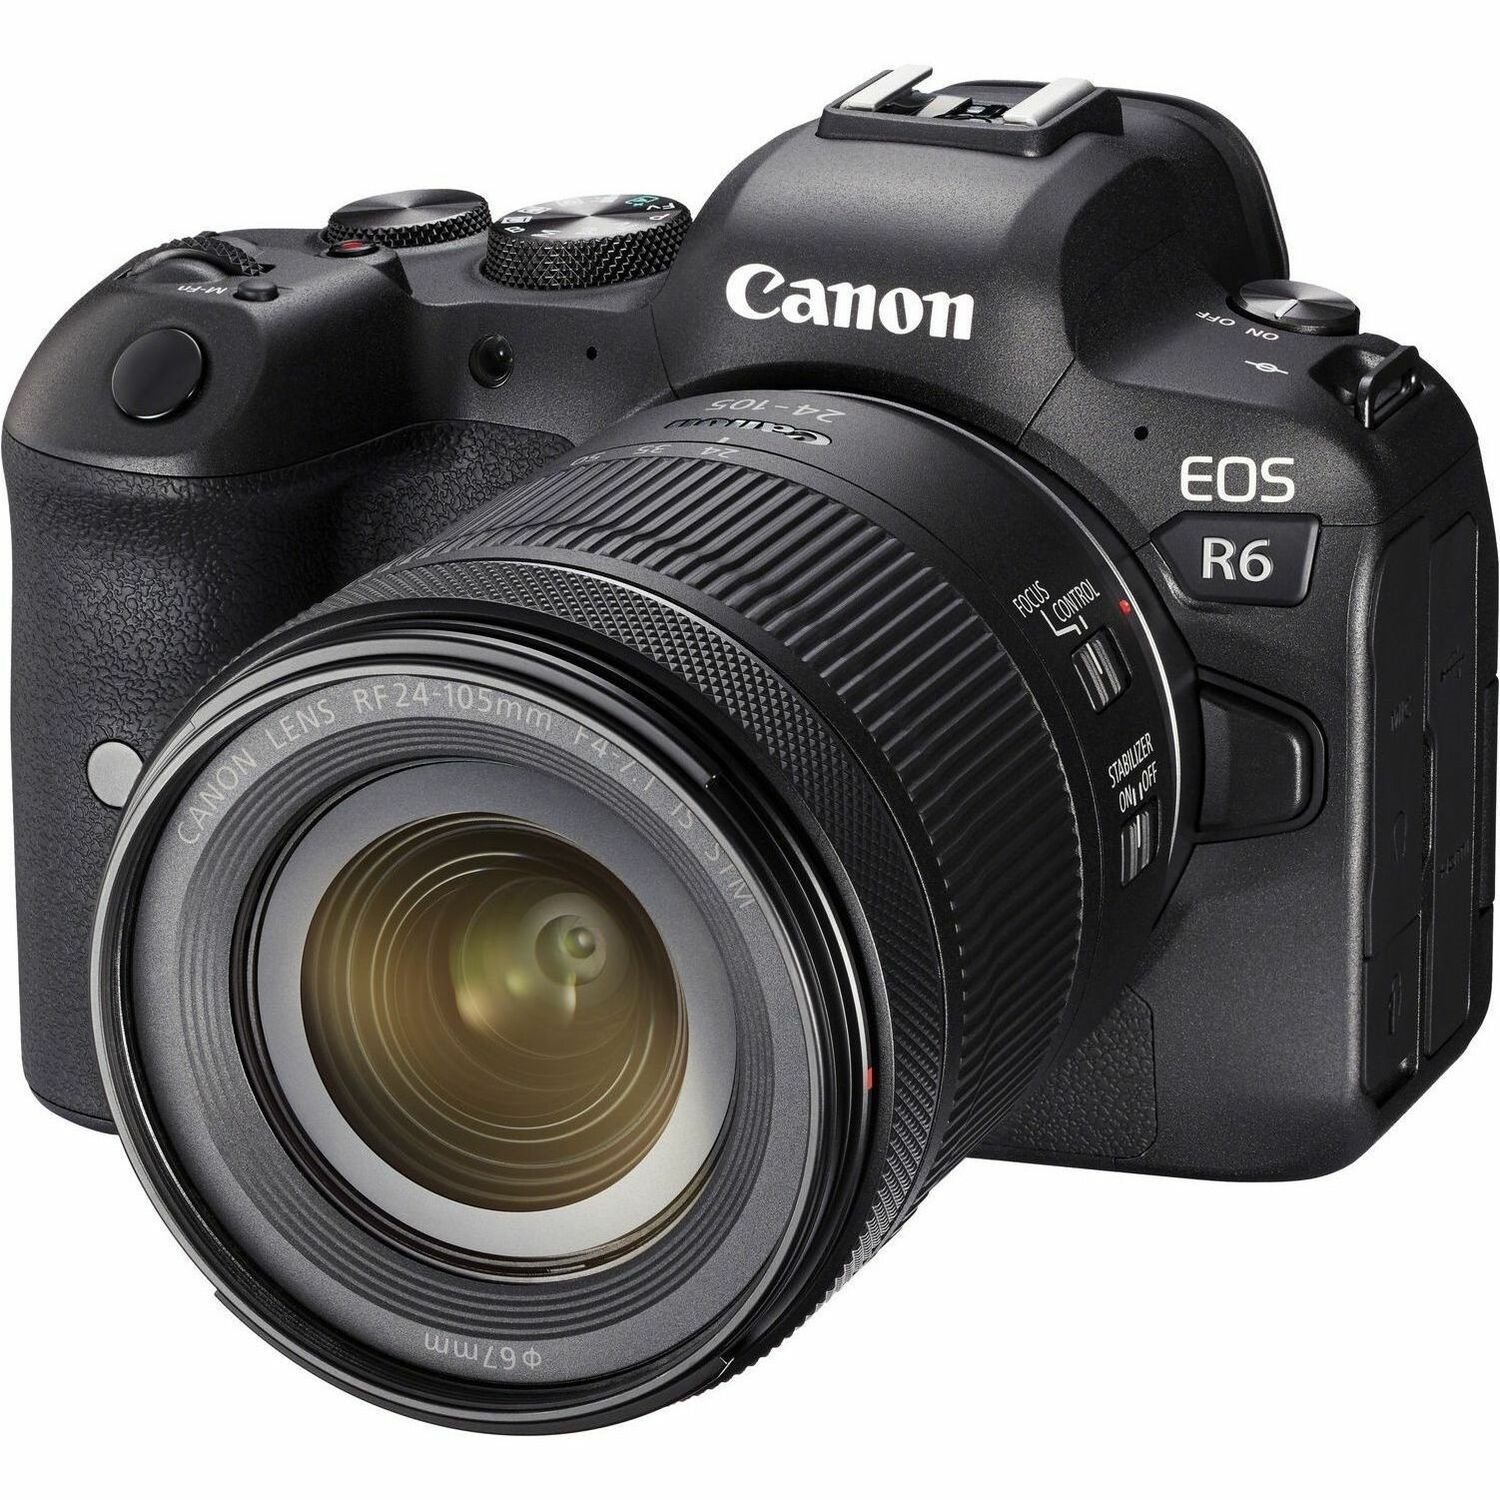 Canon EOS R6 Mark II 24.2 Megapixel Full Frame Sensor Mirrorless Camera with Lens - 0.94" - 4.13"